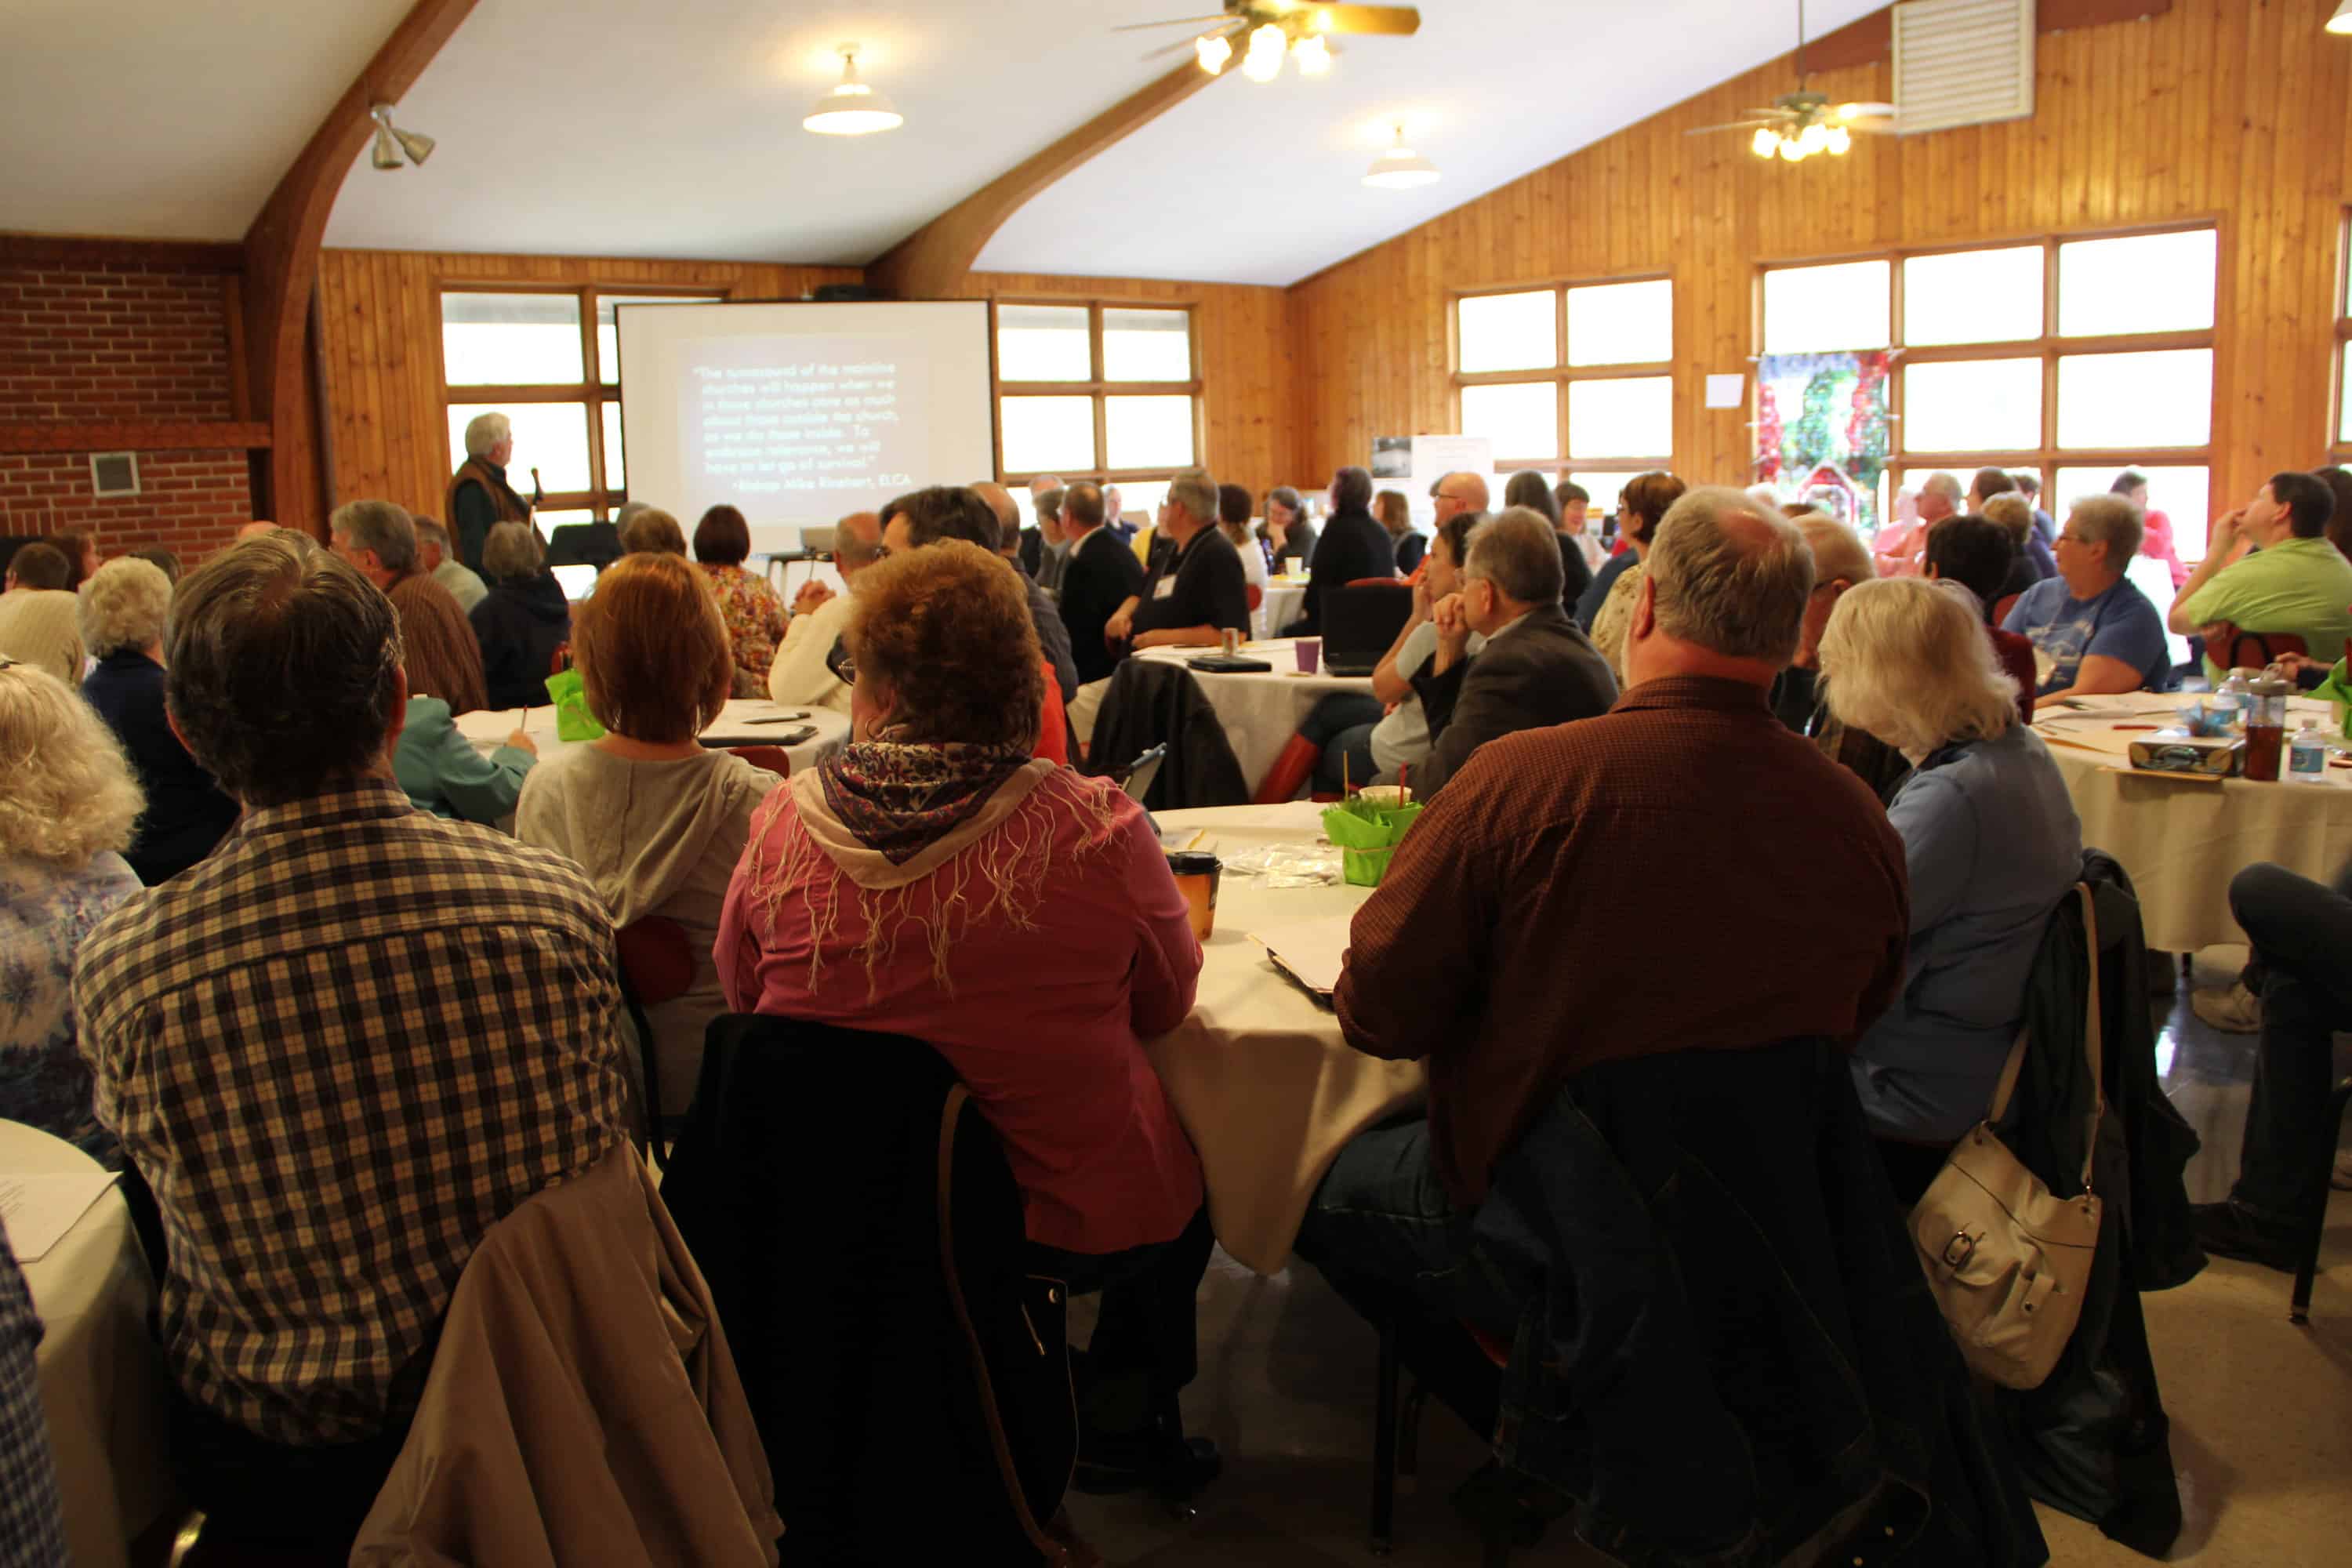 Meeting held in Deer Center at Camp Wyoming